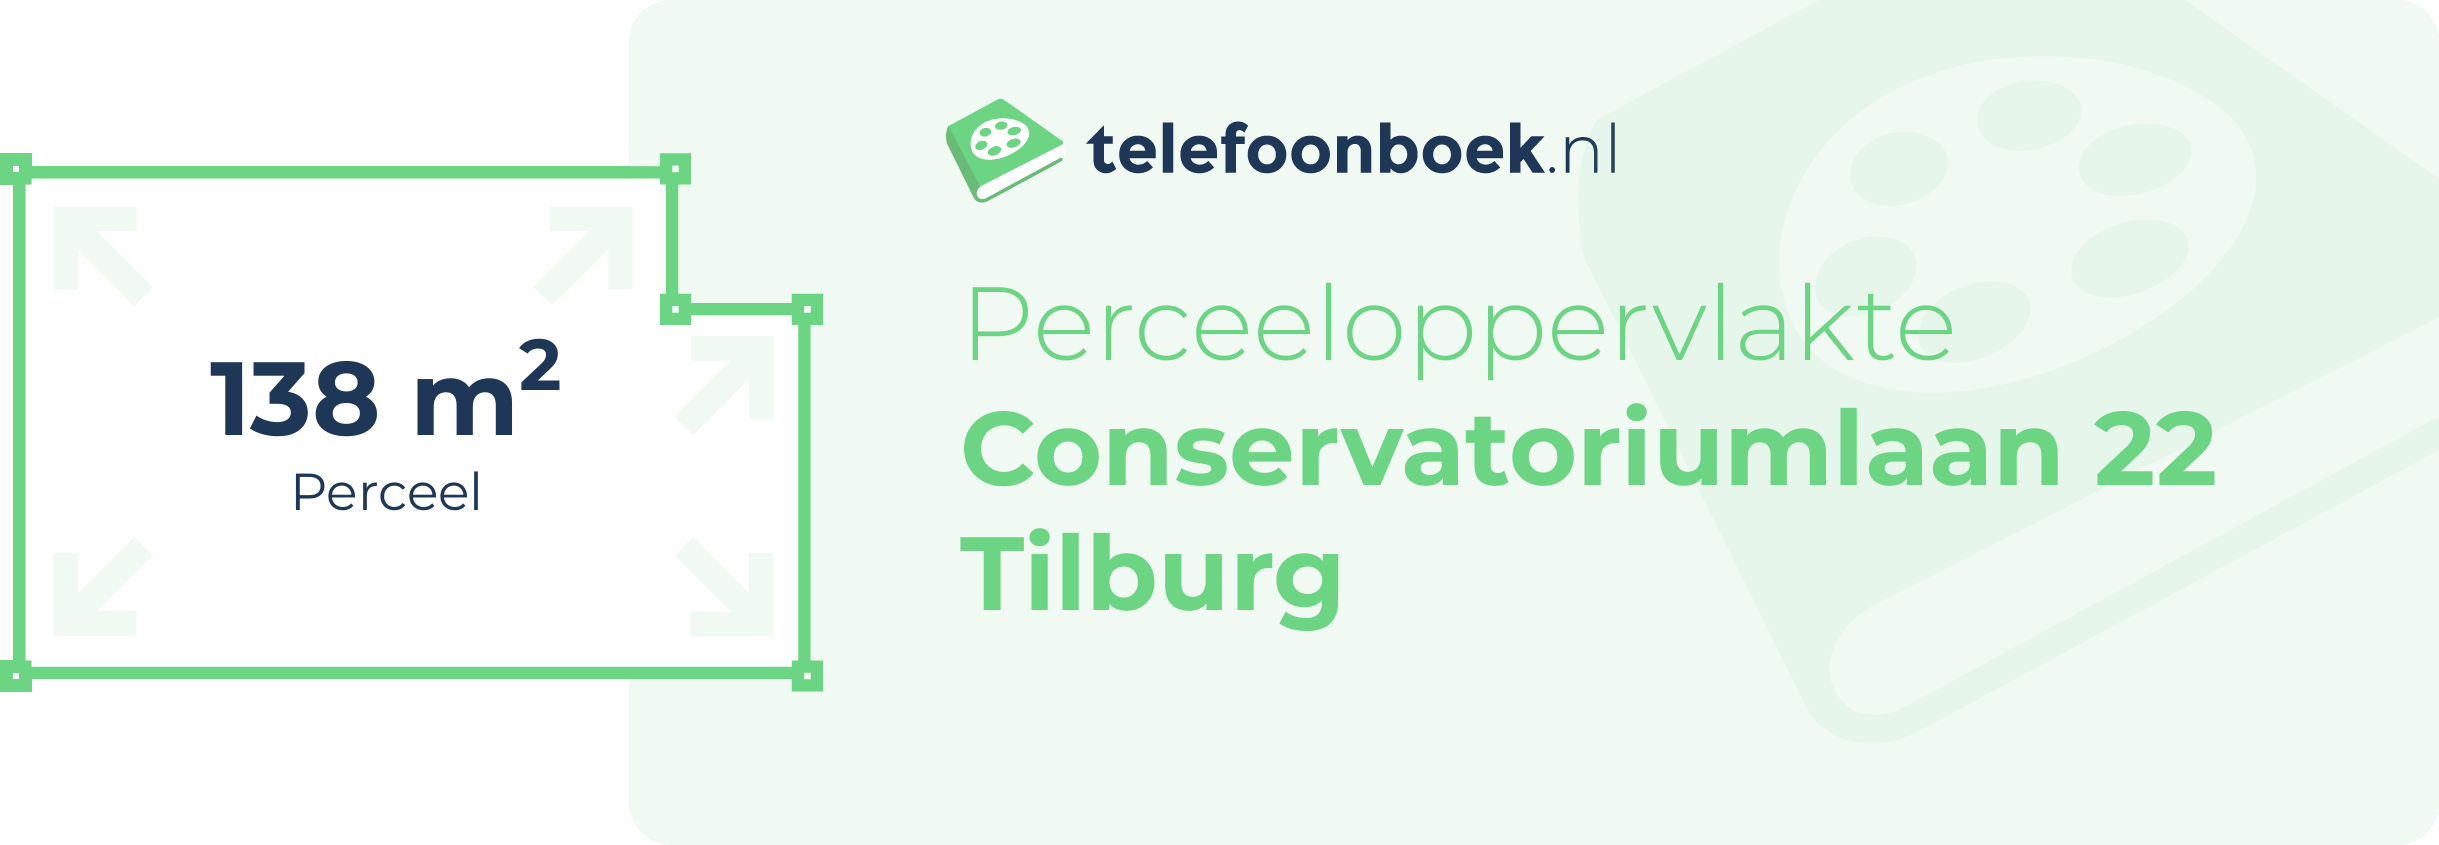 Perceeloppervlakte Conservatoriumlaan 22 Tilburg